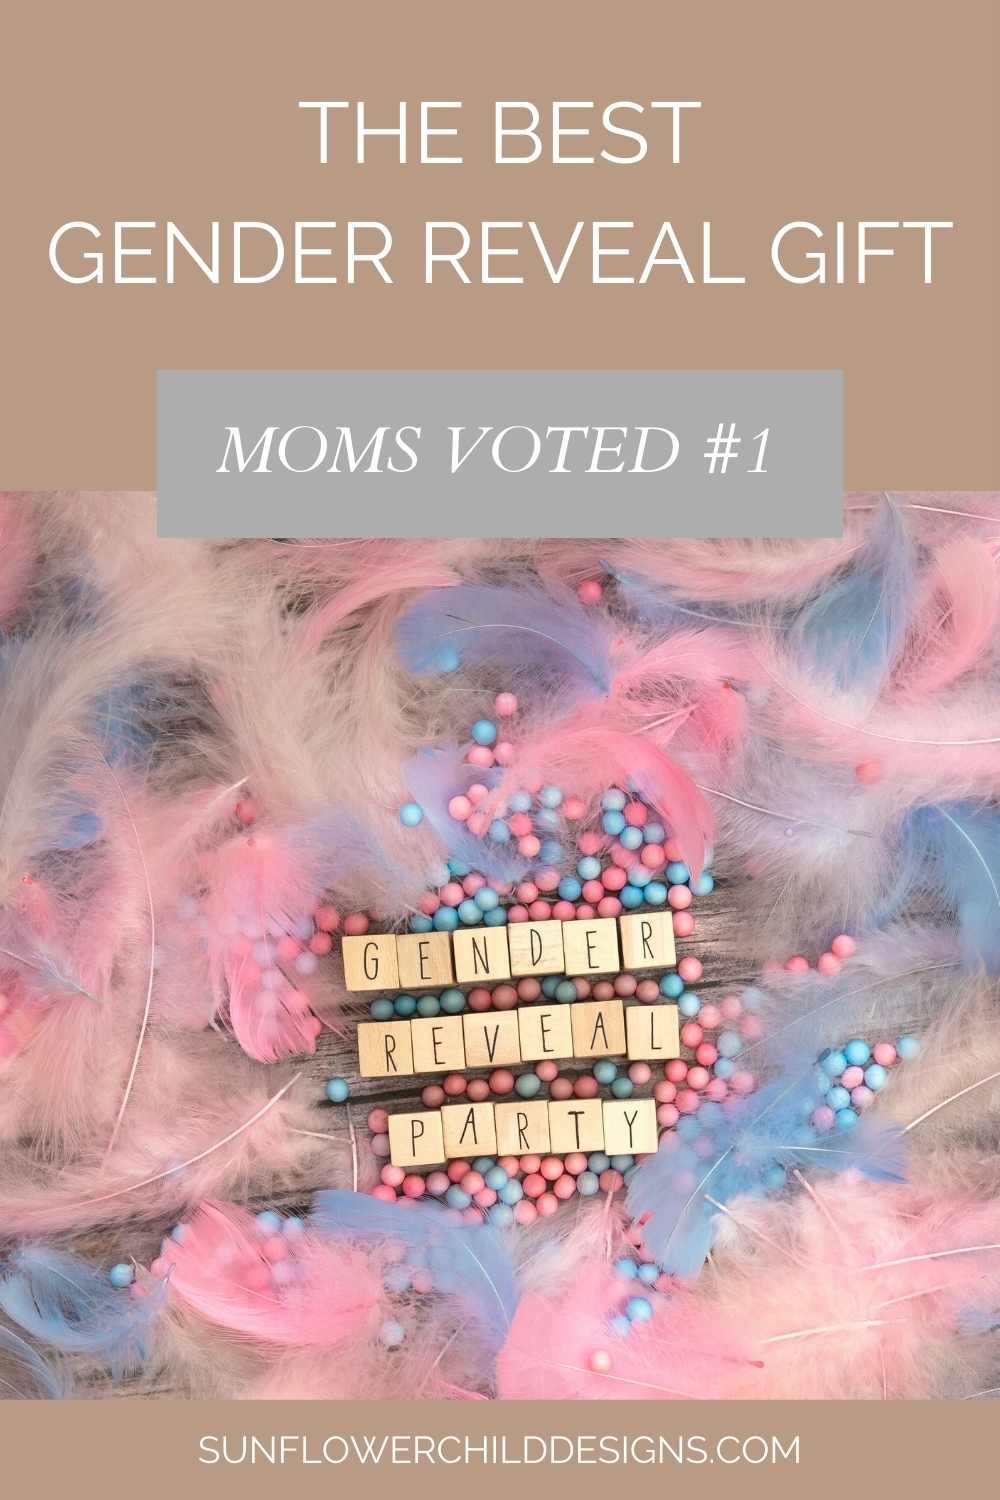 The Best Gender Reveal Gift